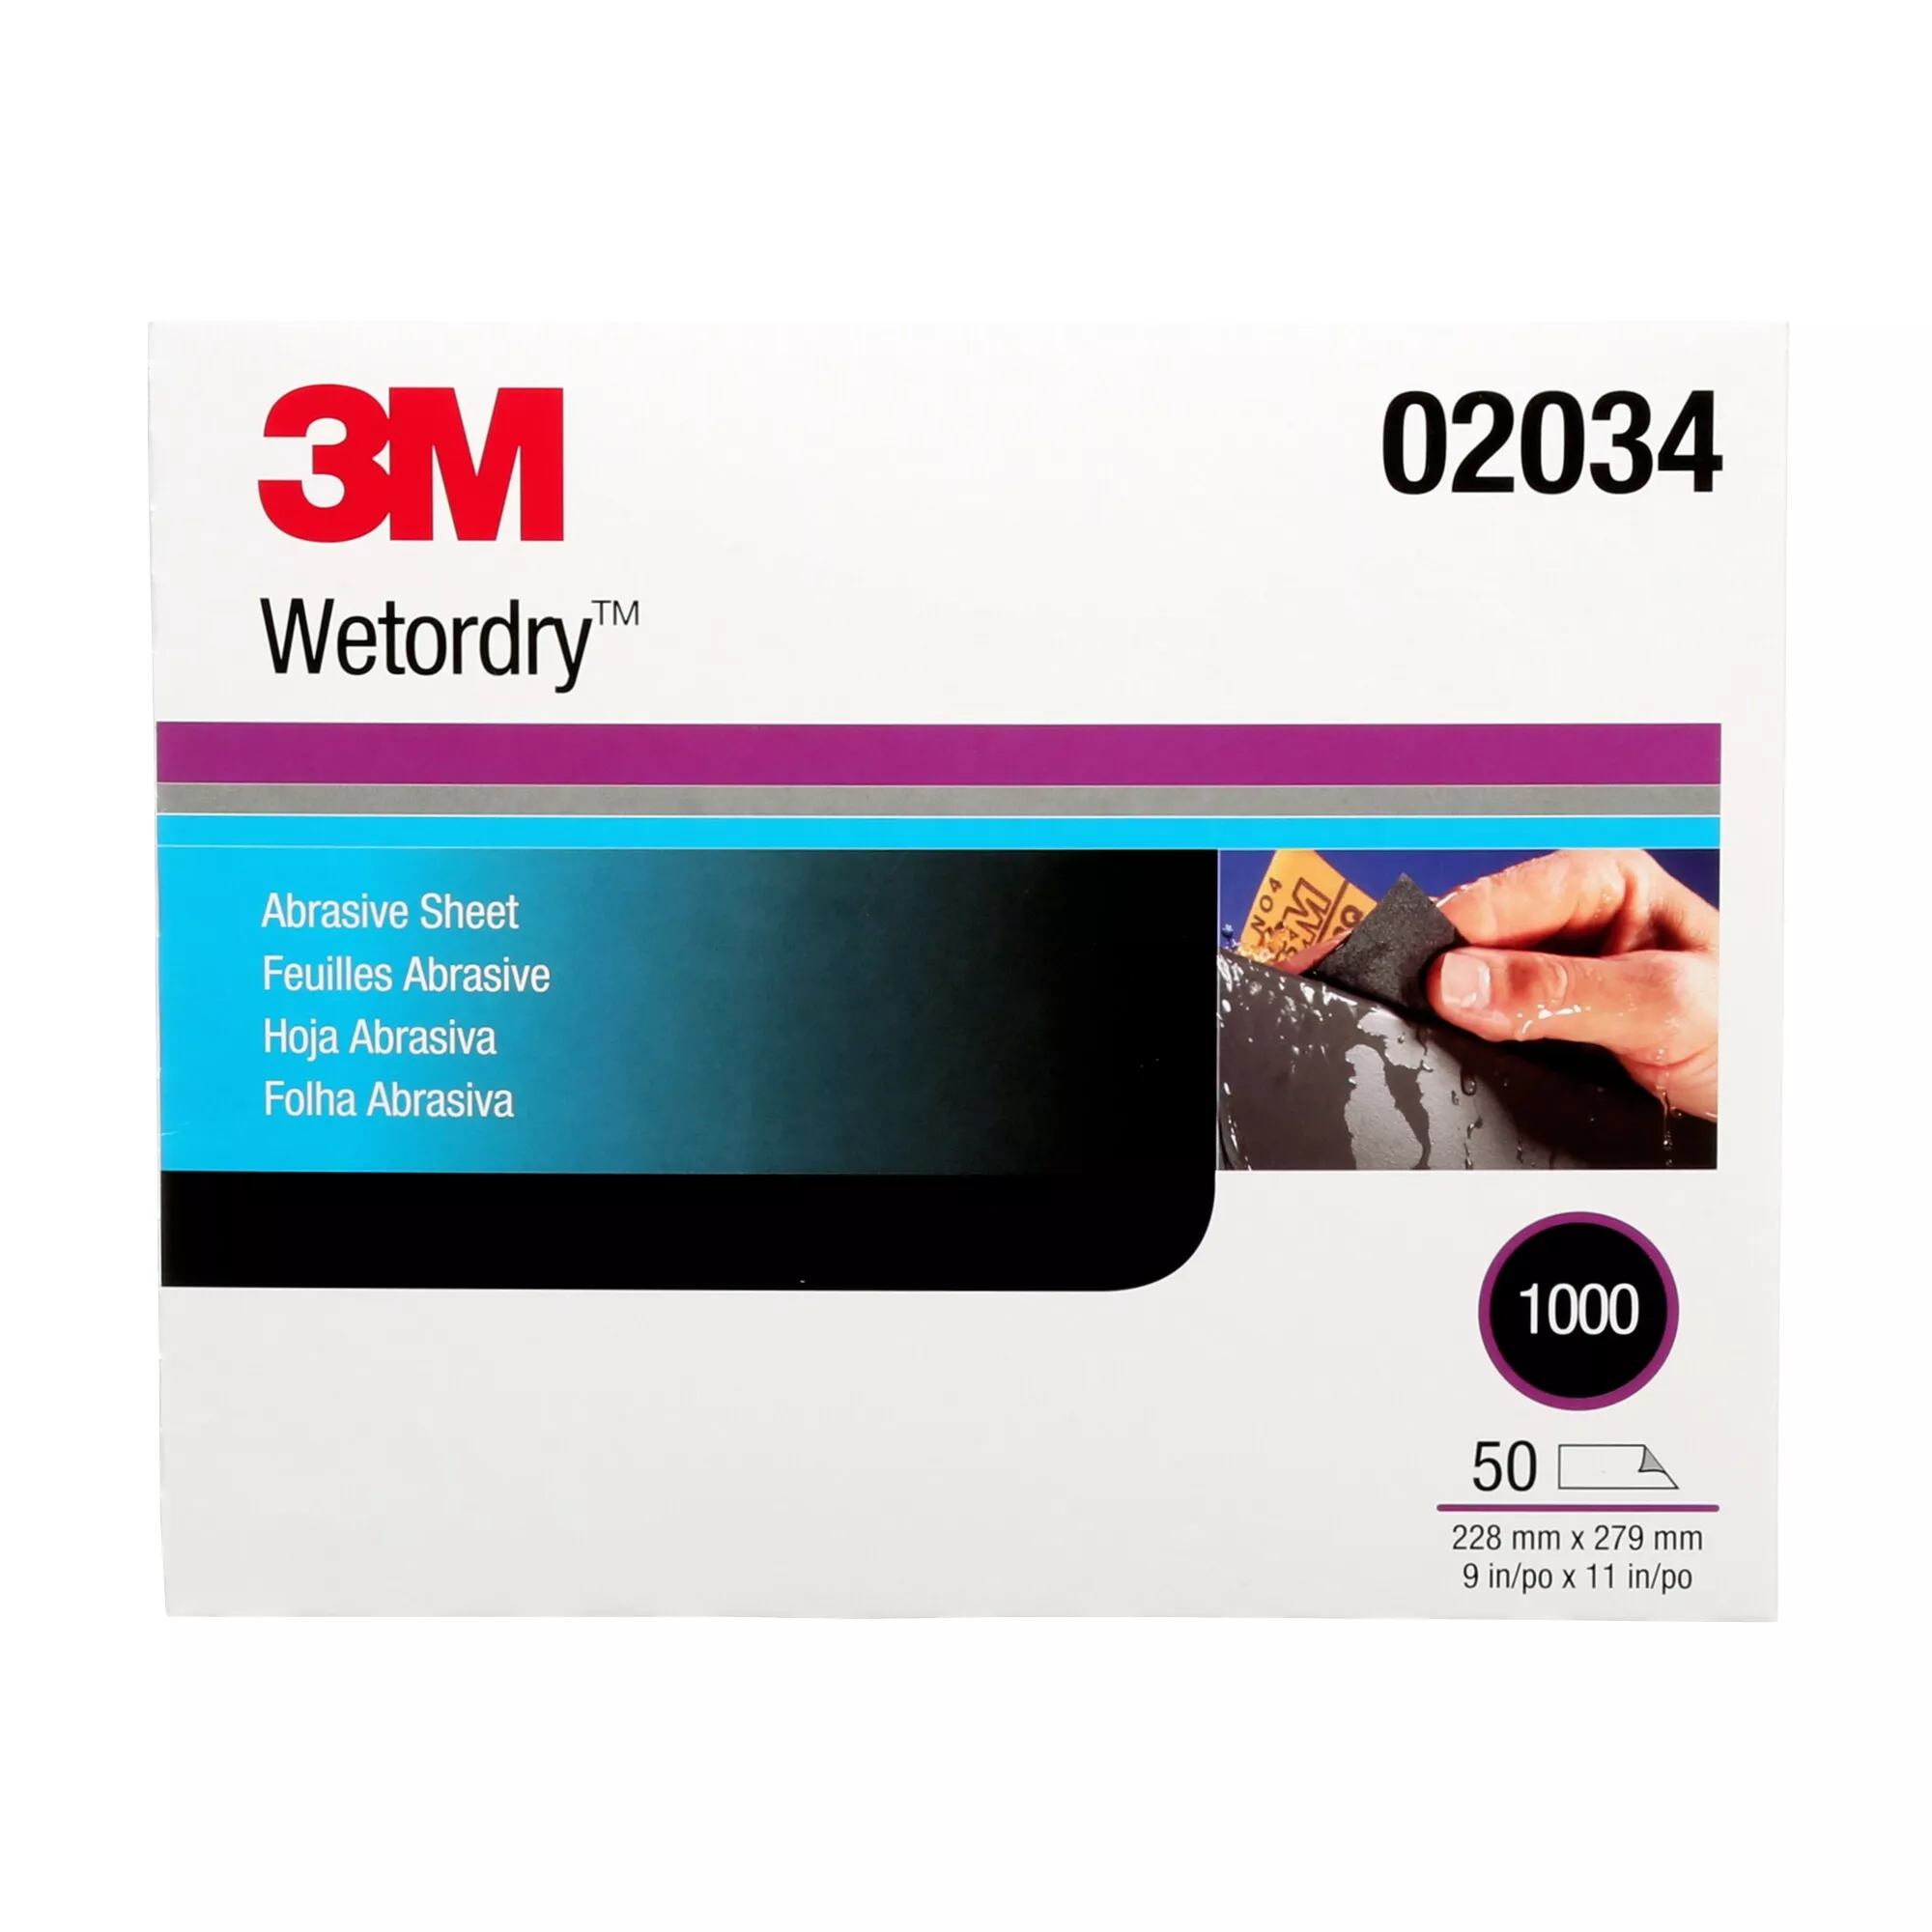 SKU 7100003726 | 3M™ Wetordry™ Abrasive Sheet